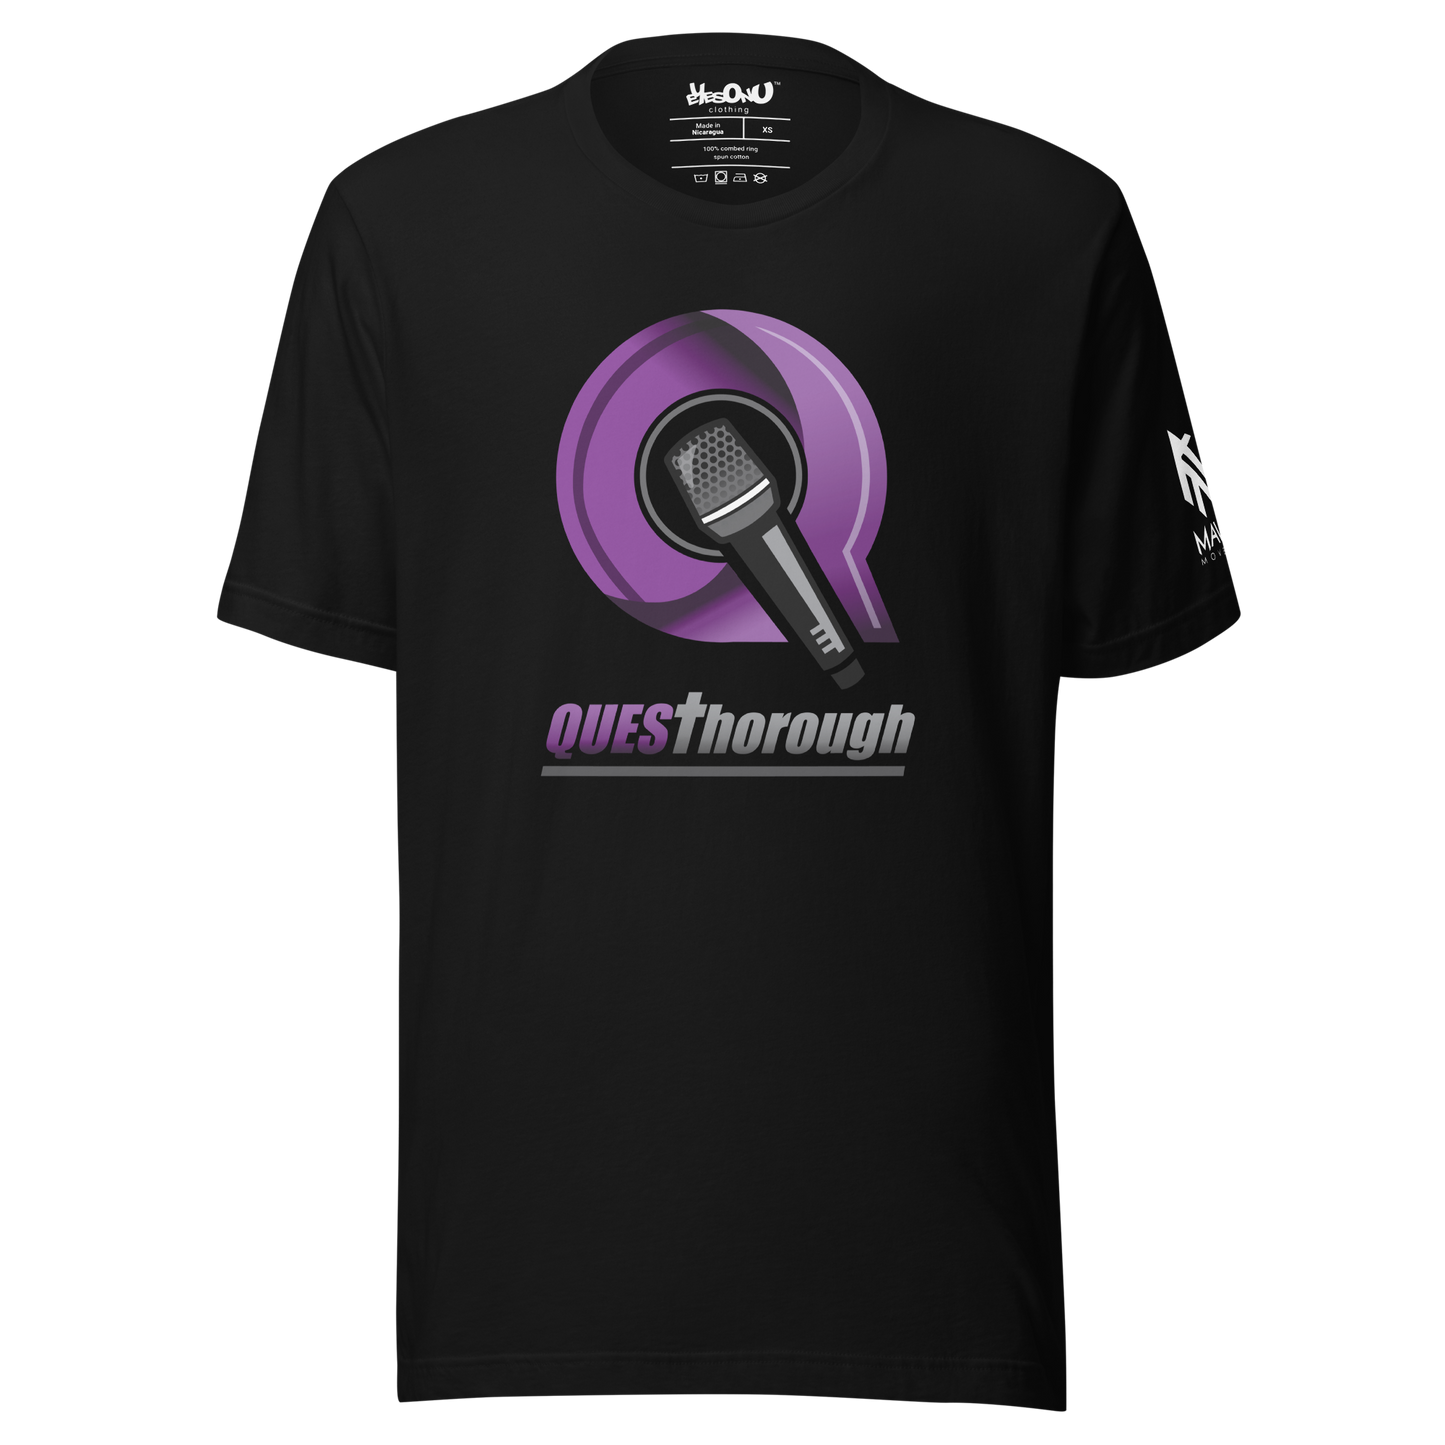 QuesThorough Signature T-shirt (3 colors)